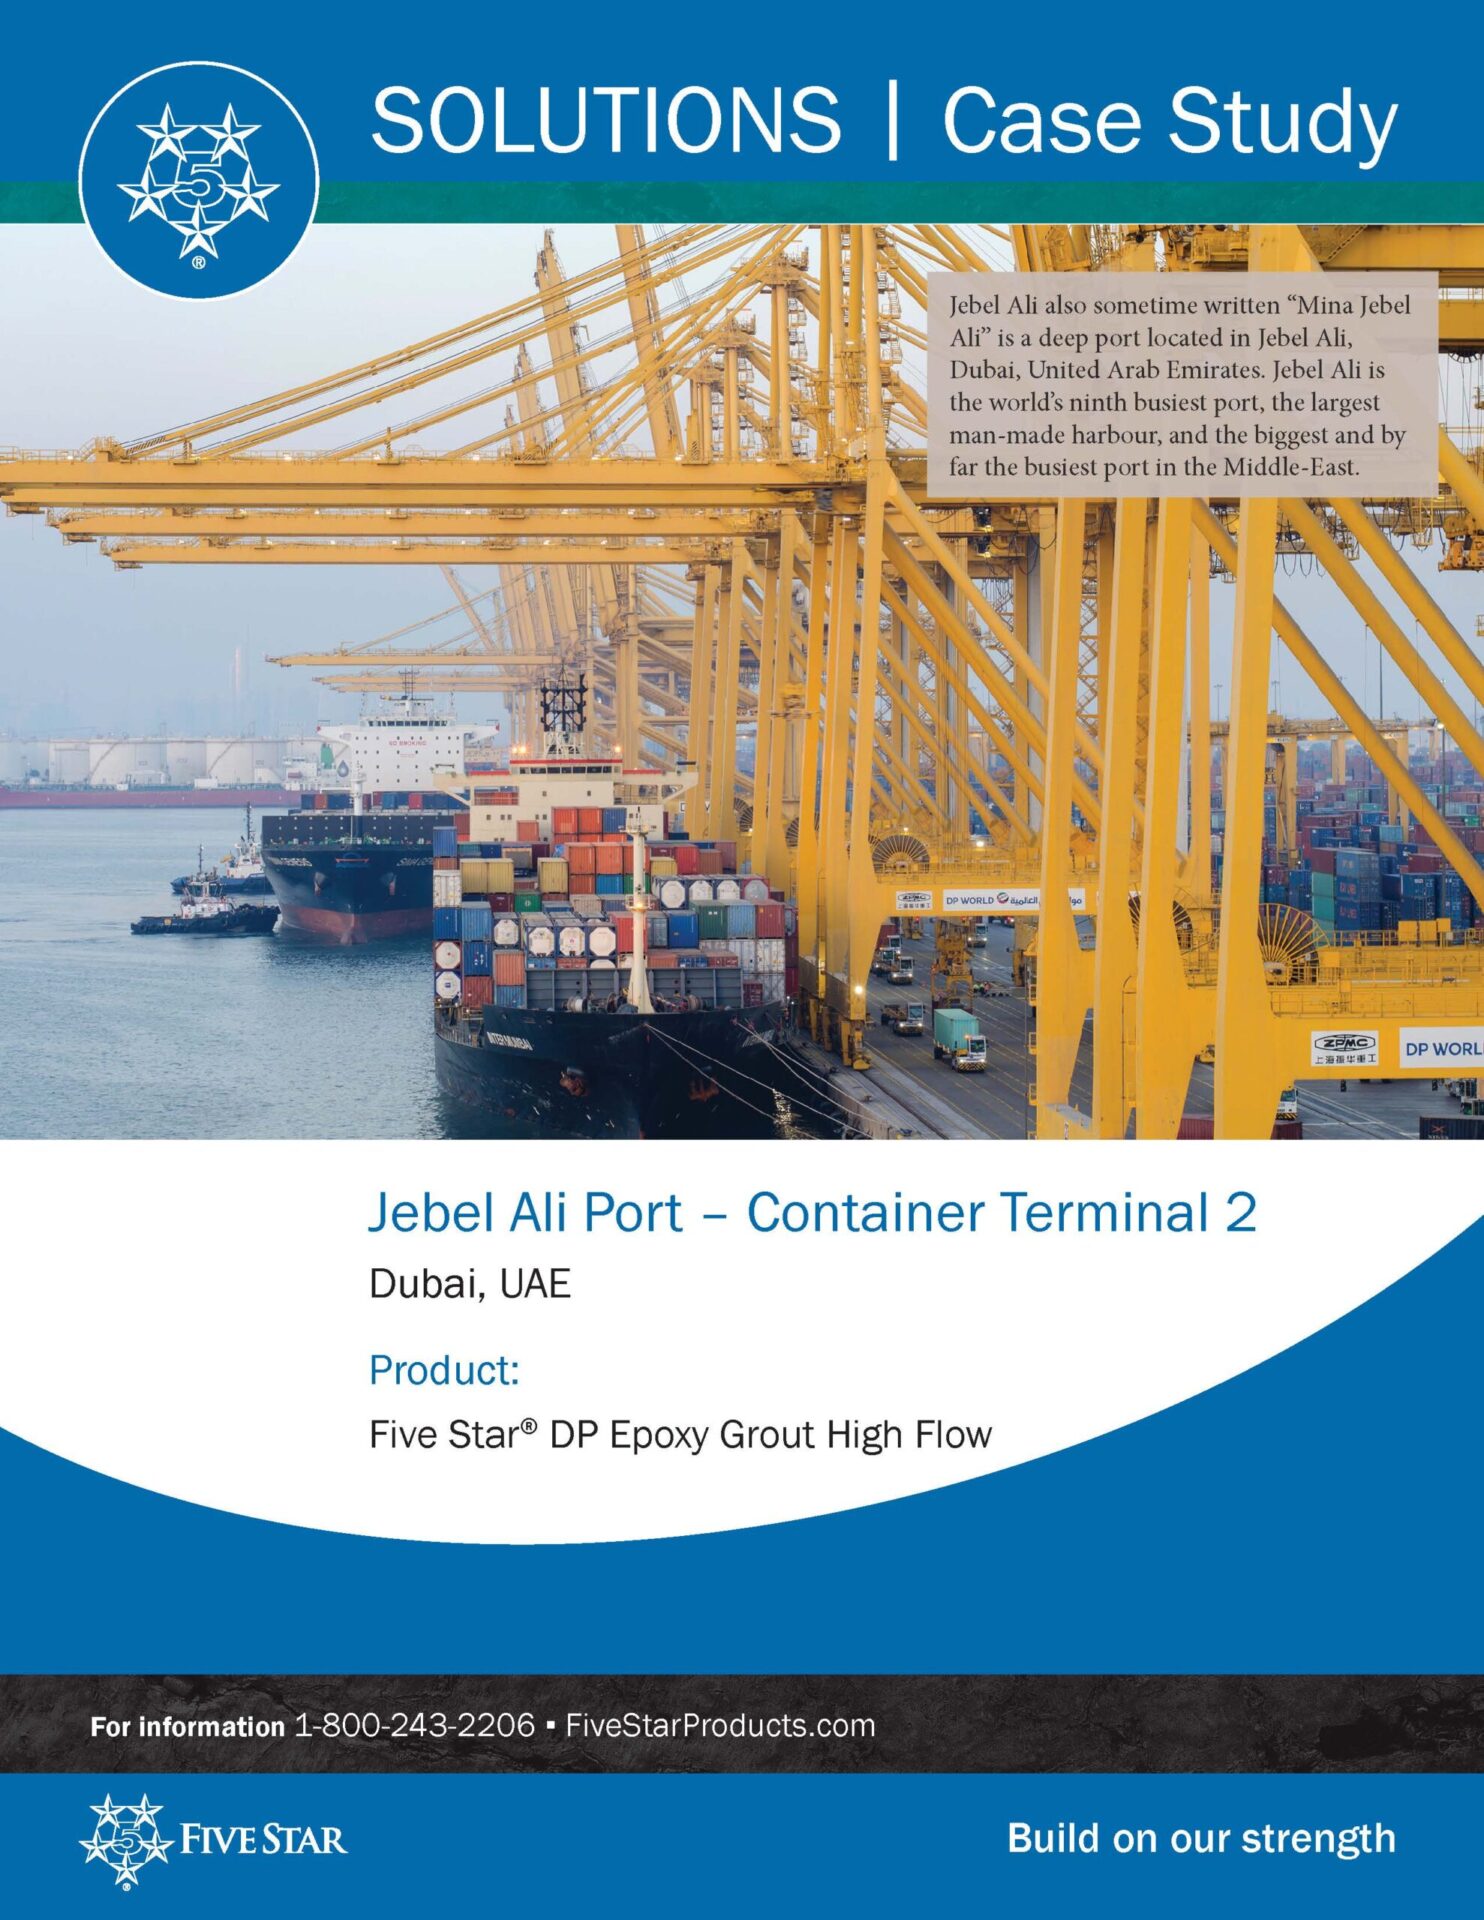 Case Study on Jebel Ali Port Container Terminal 2, Dubai, UAE